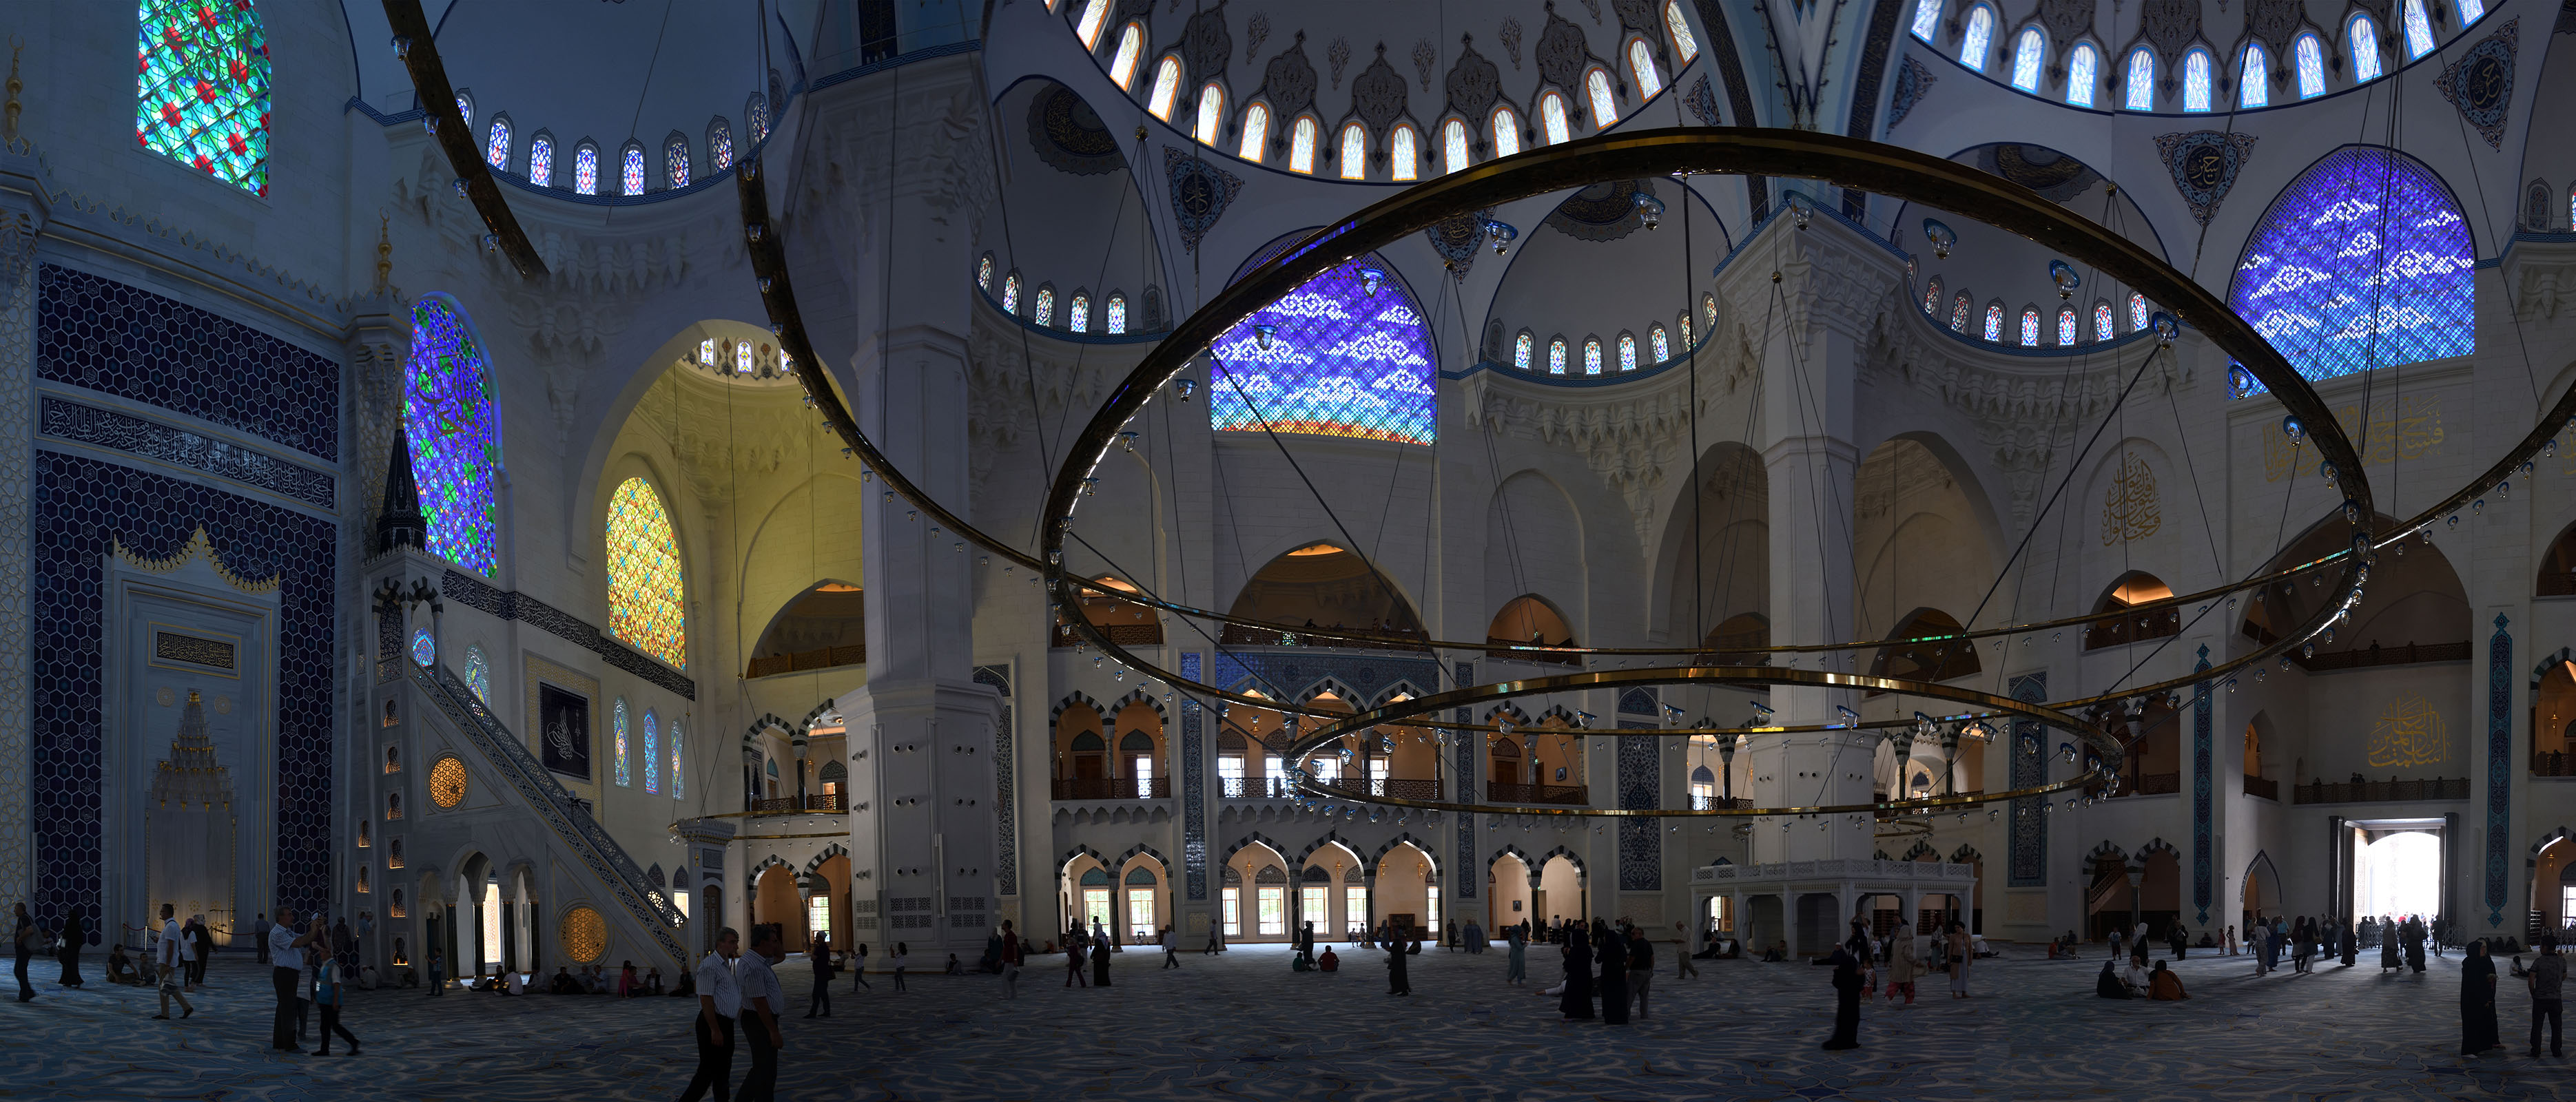 Istanbul big camlica mosque june 2019 1940 panorama 1